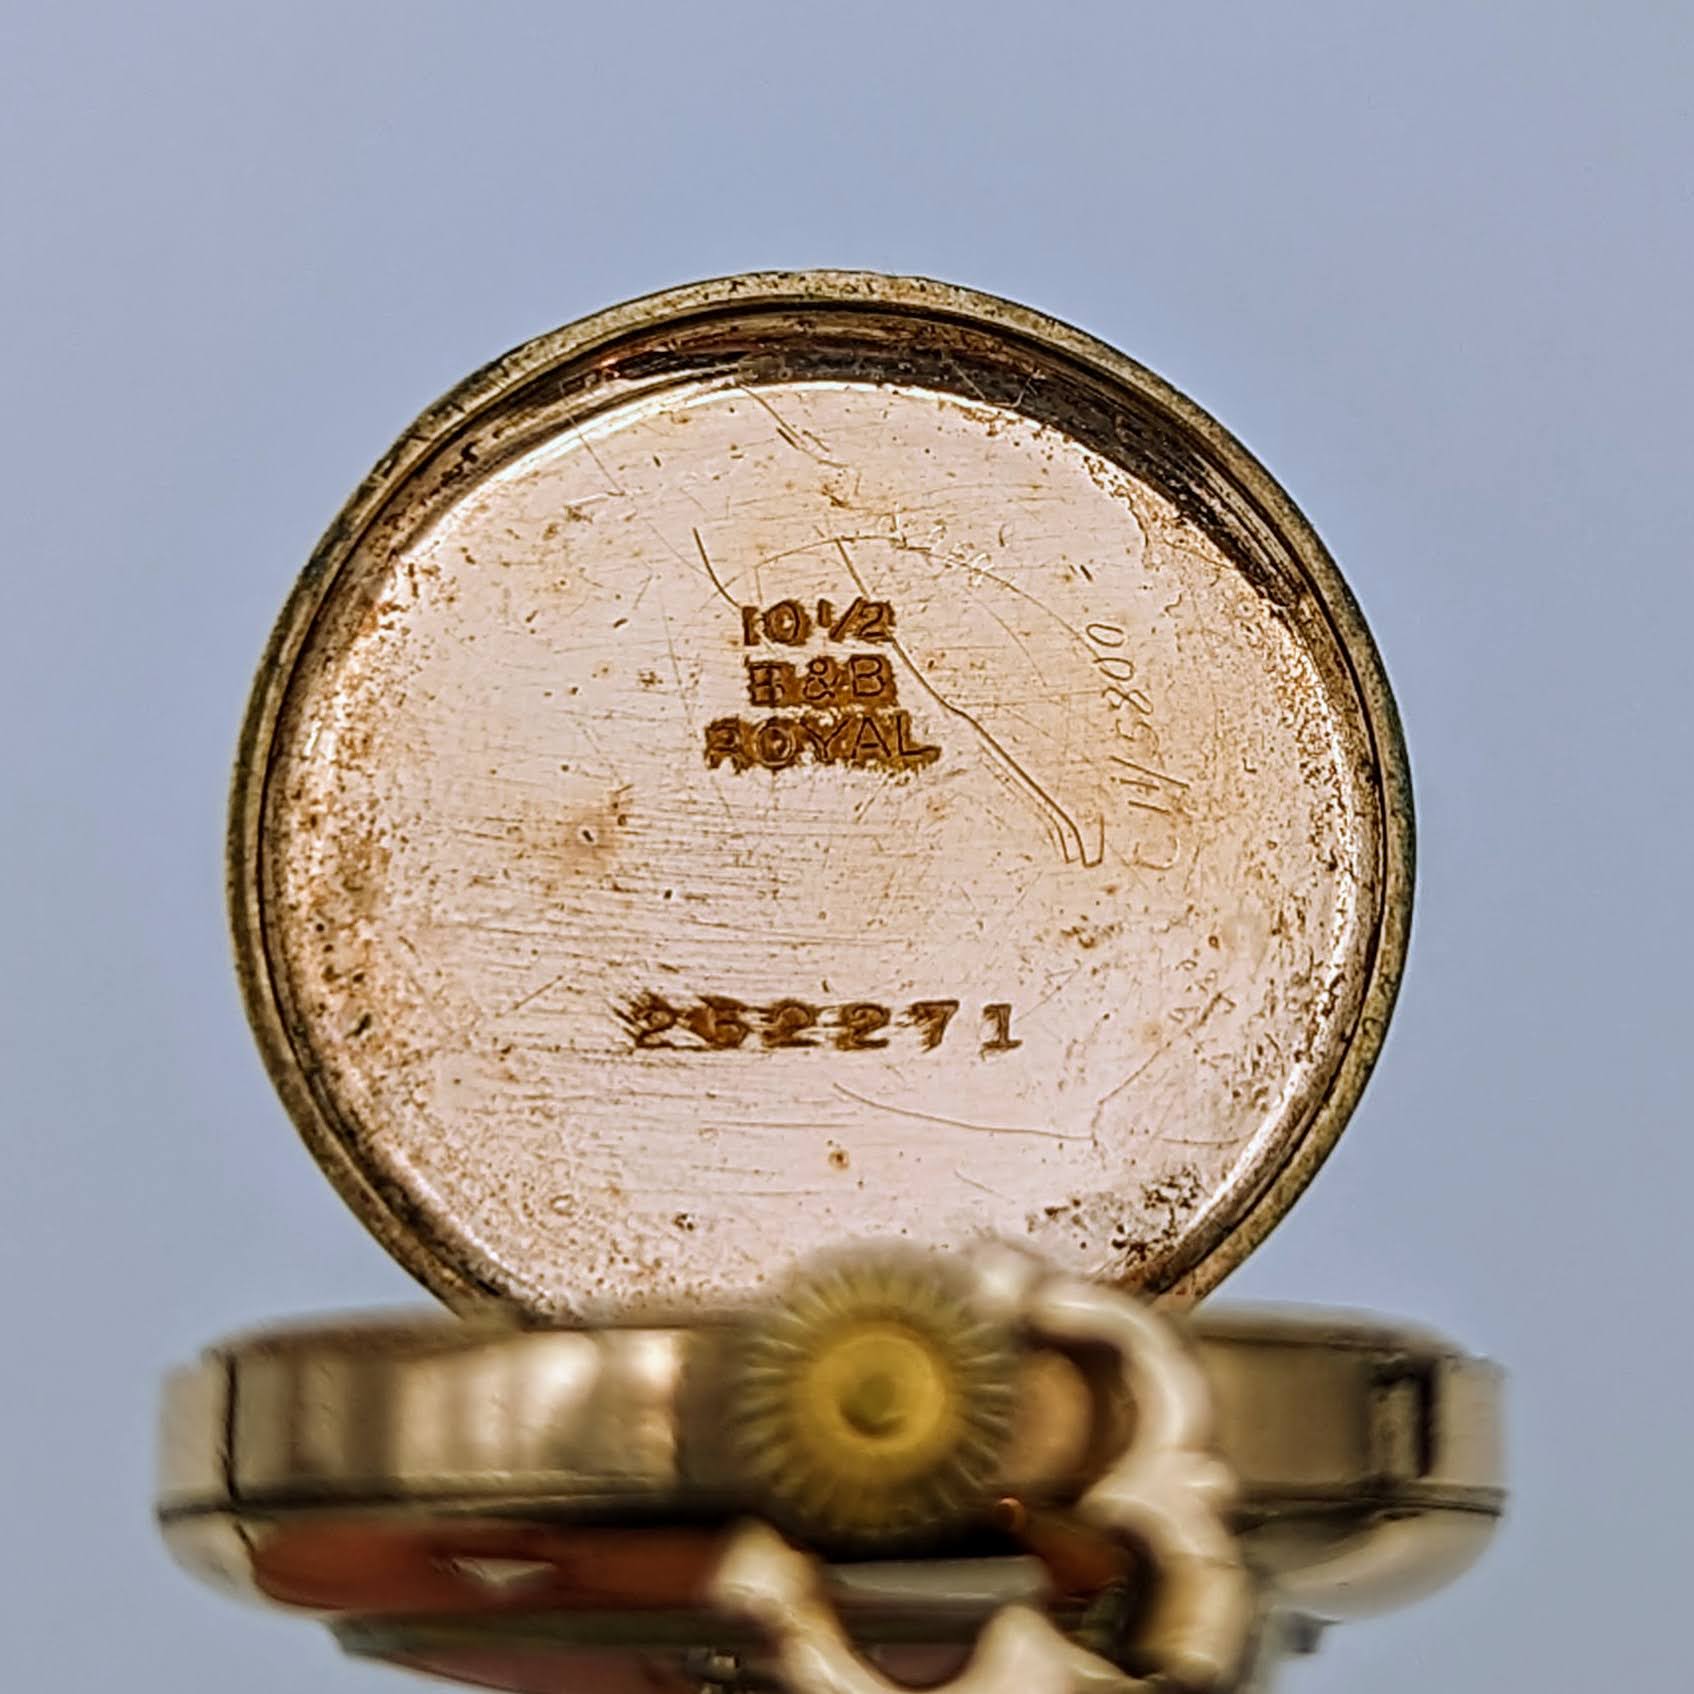 1890s PRIDE Transitional Wristwatch Swiss Movement 15 Jewels 2 Adjustments 12K GF